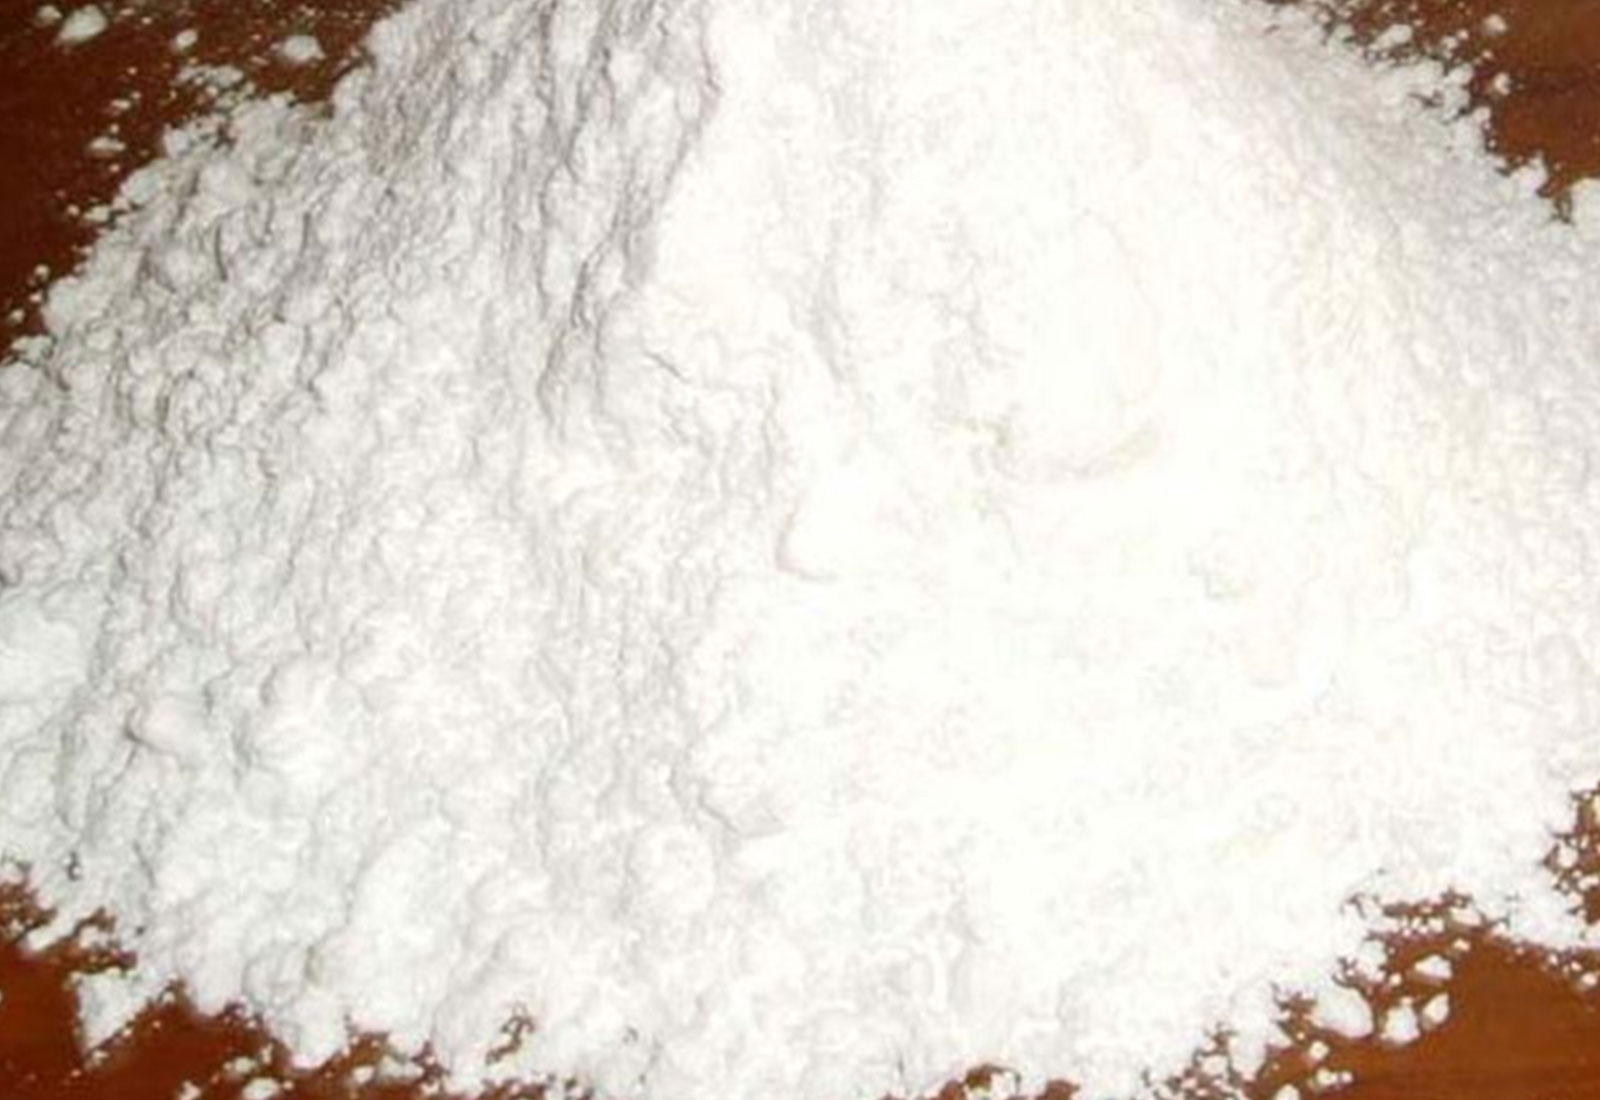 Pharmaceutical Raw Materials | Caltron Clays